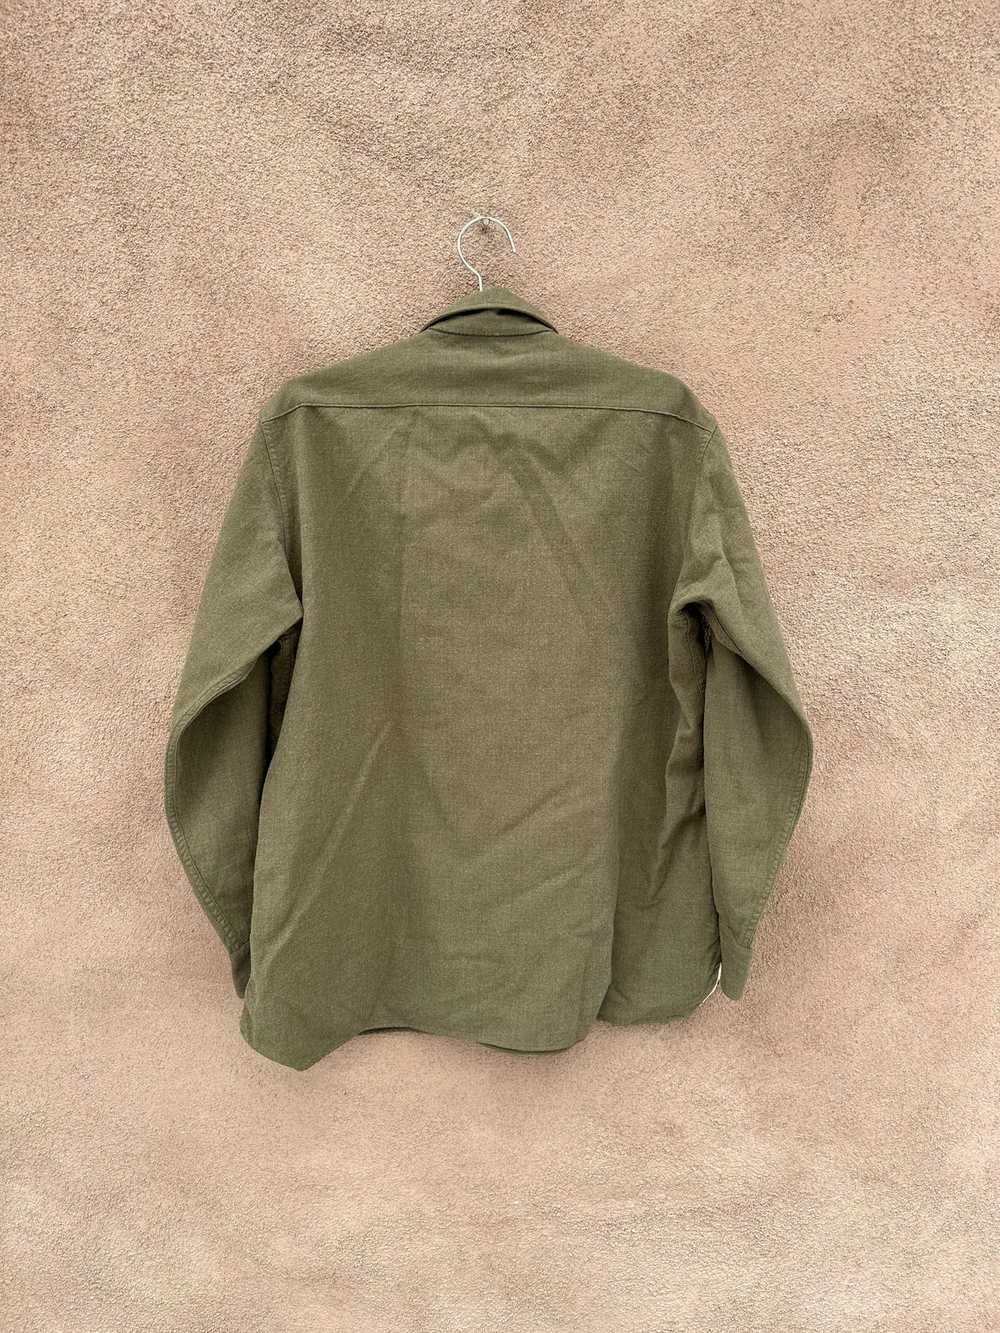 Drab Green WWII Wool U.S. Army Shirt - image 3